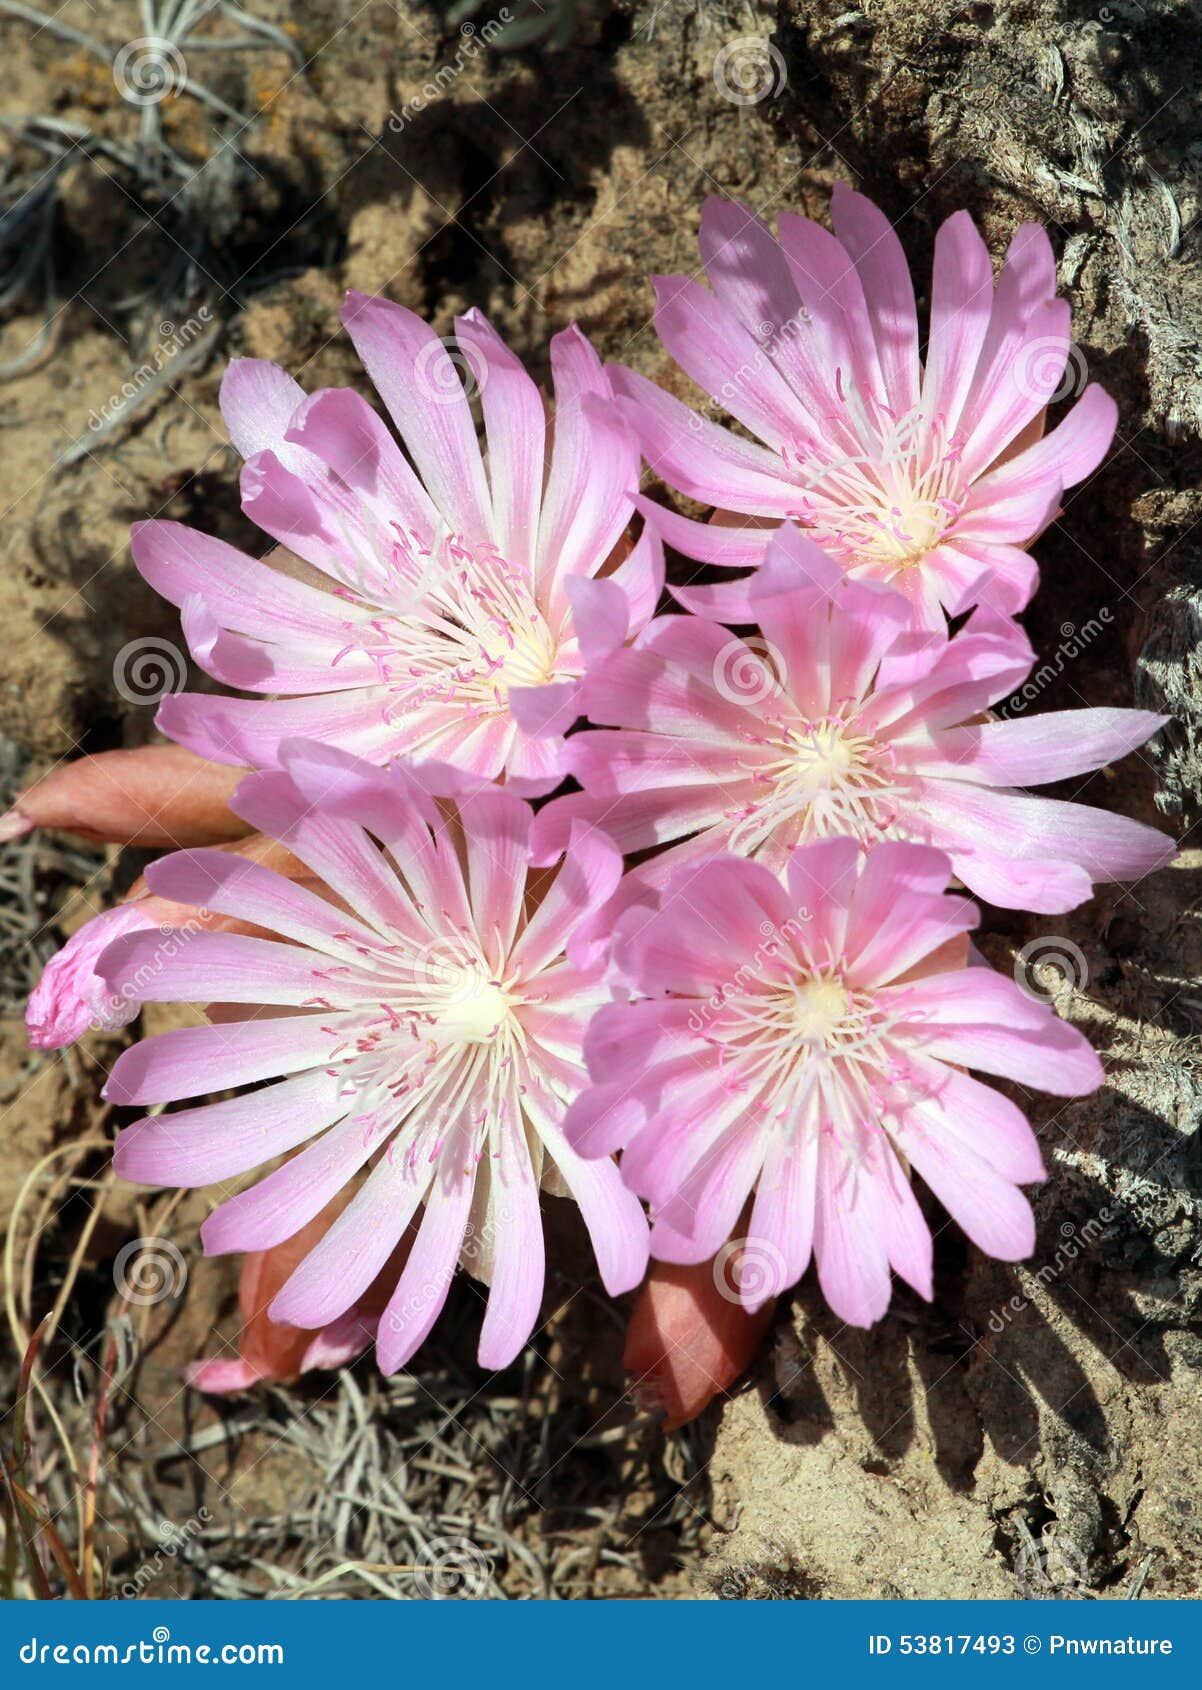 cluster of bitterroot flowers - lewisia rediviva